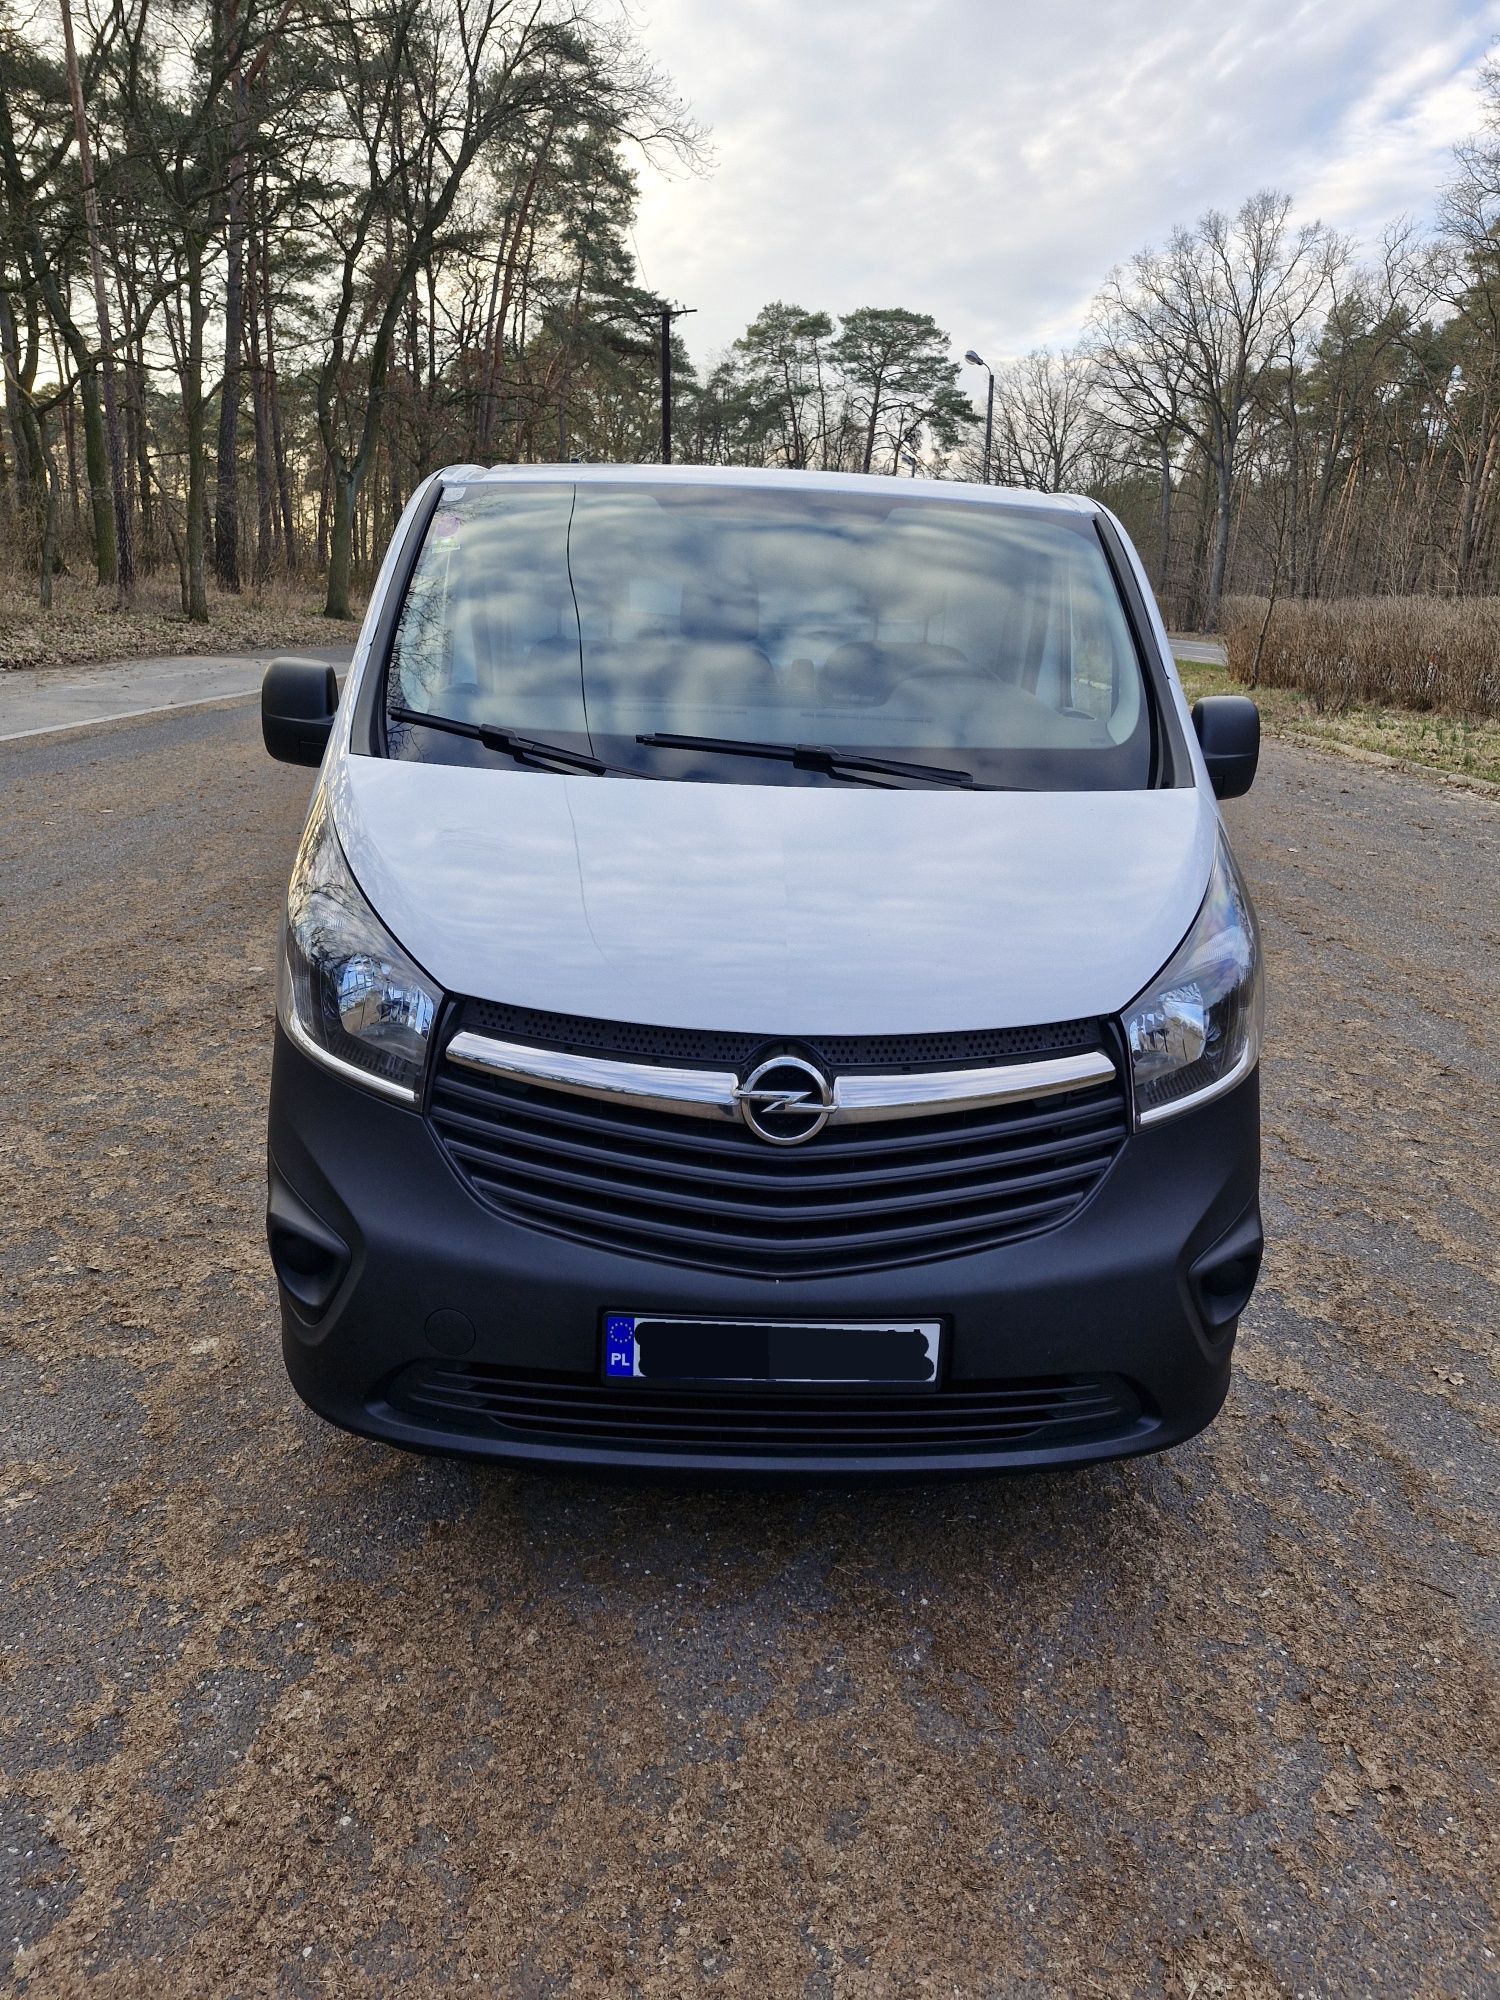 Opel Vivaro 2016 1.6 125KM stan idealny